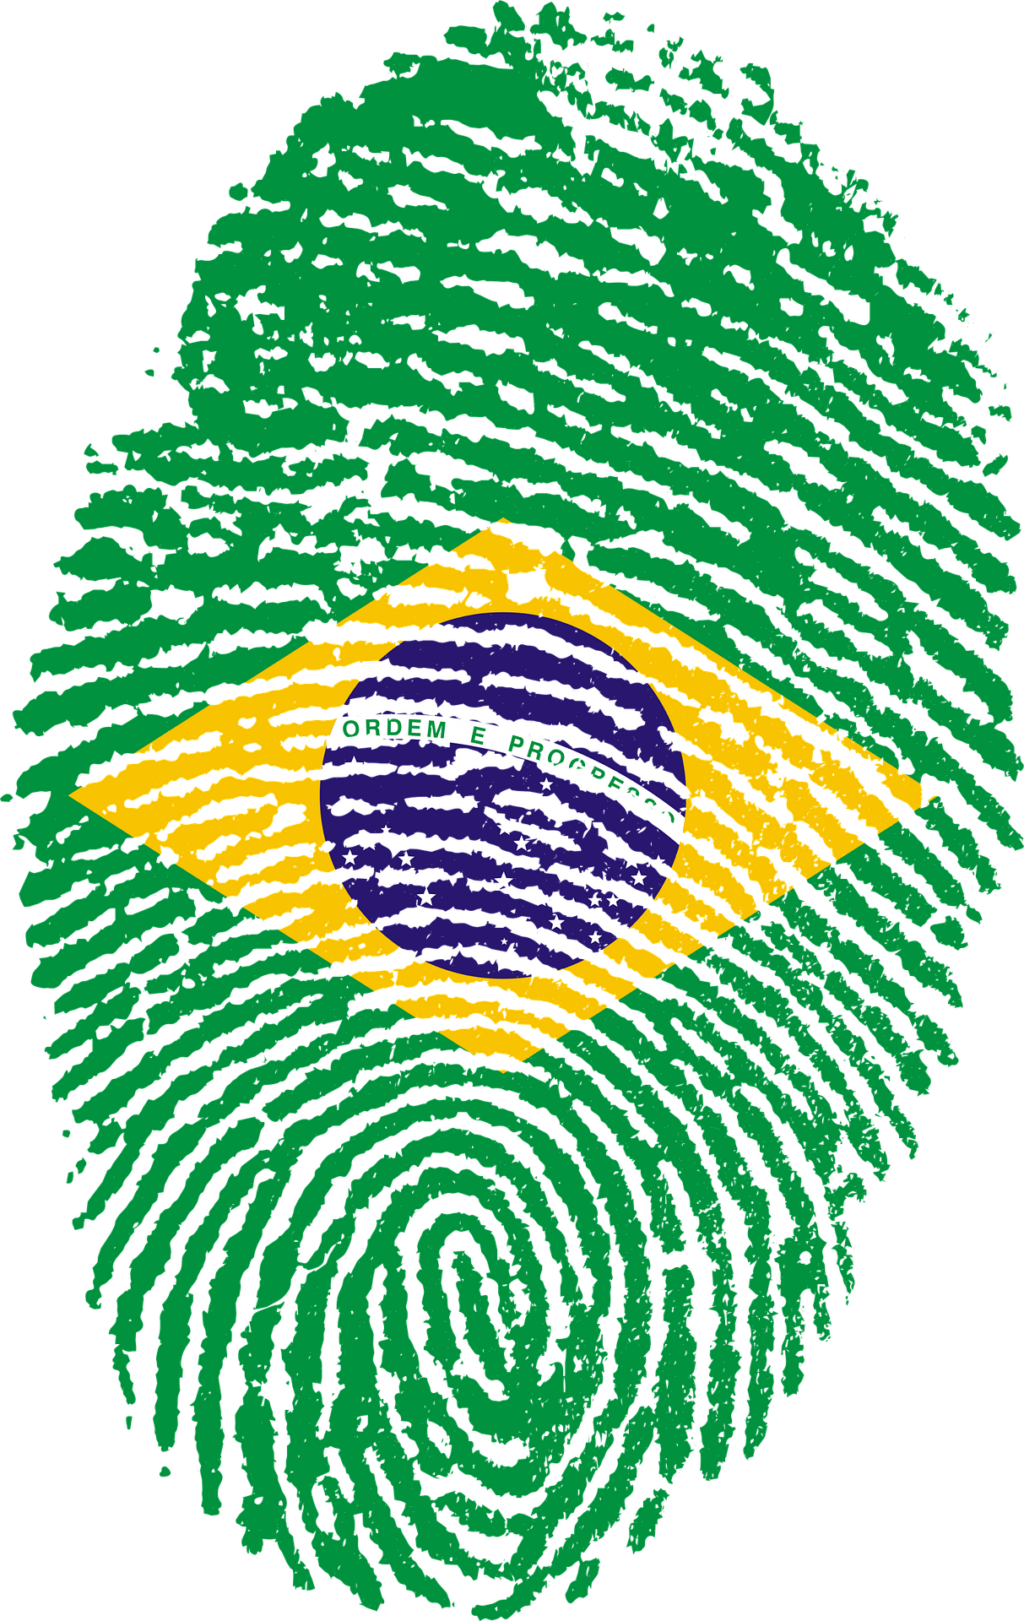 fichier-brasil-2014-jpg-wikip-dia